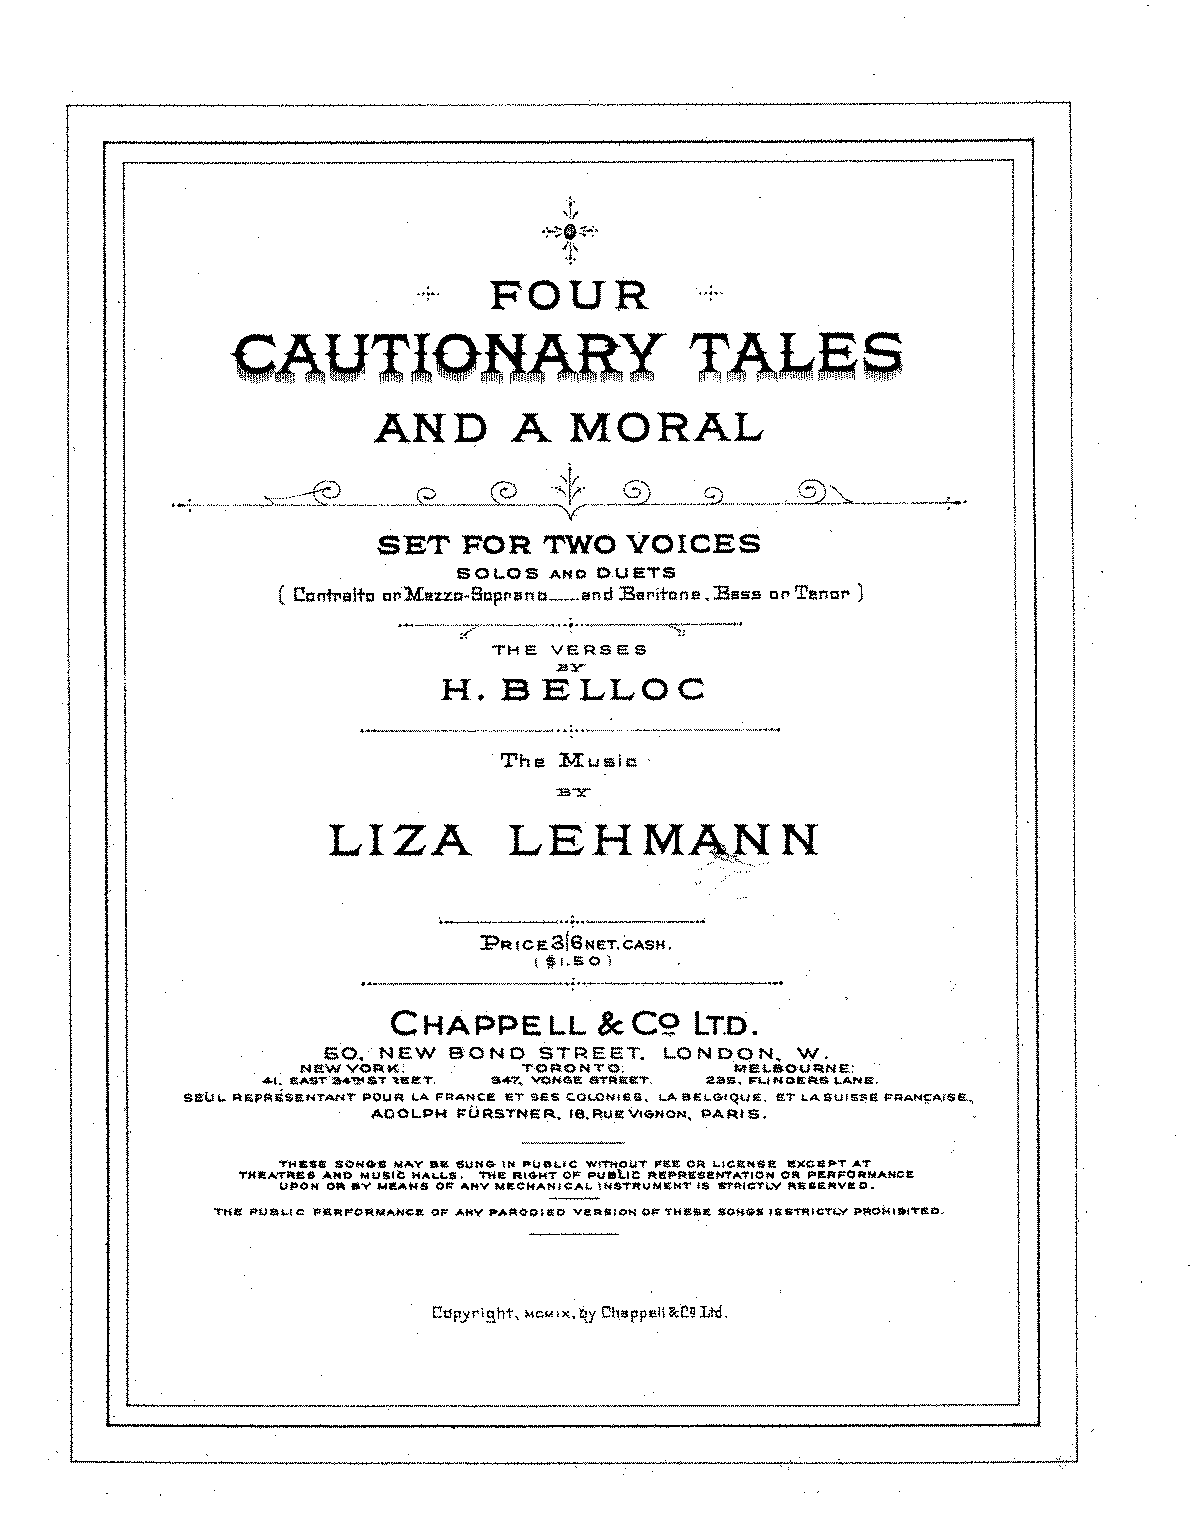 4 Cautionary Tales and a Moral (Lehmann, Liza) - IMSLP